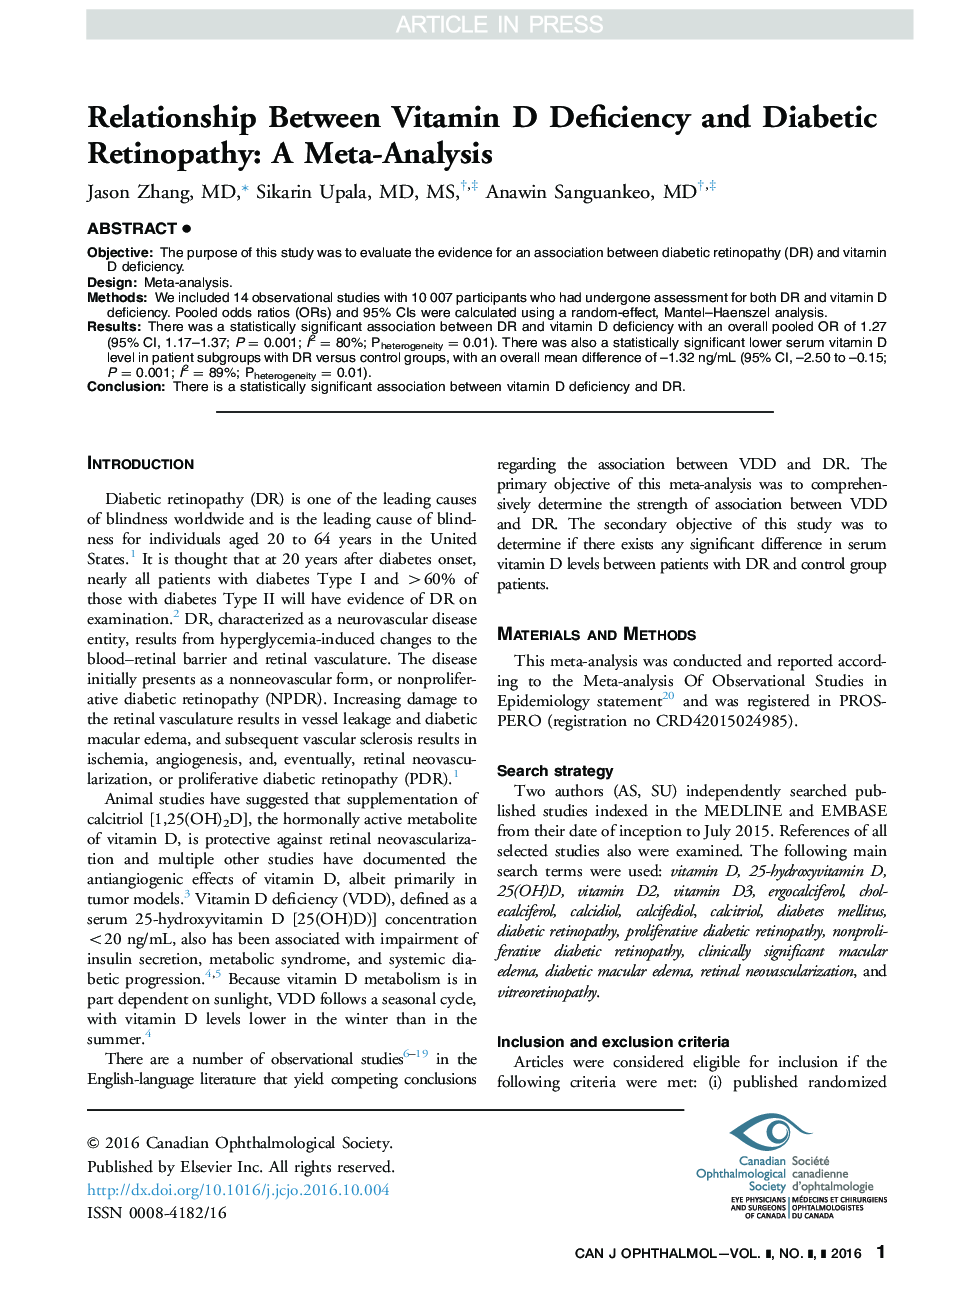 Relationship between vitamin D deficiency and diabetic retinopathy: a meta-analysis